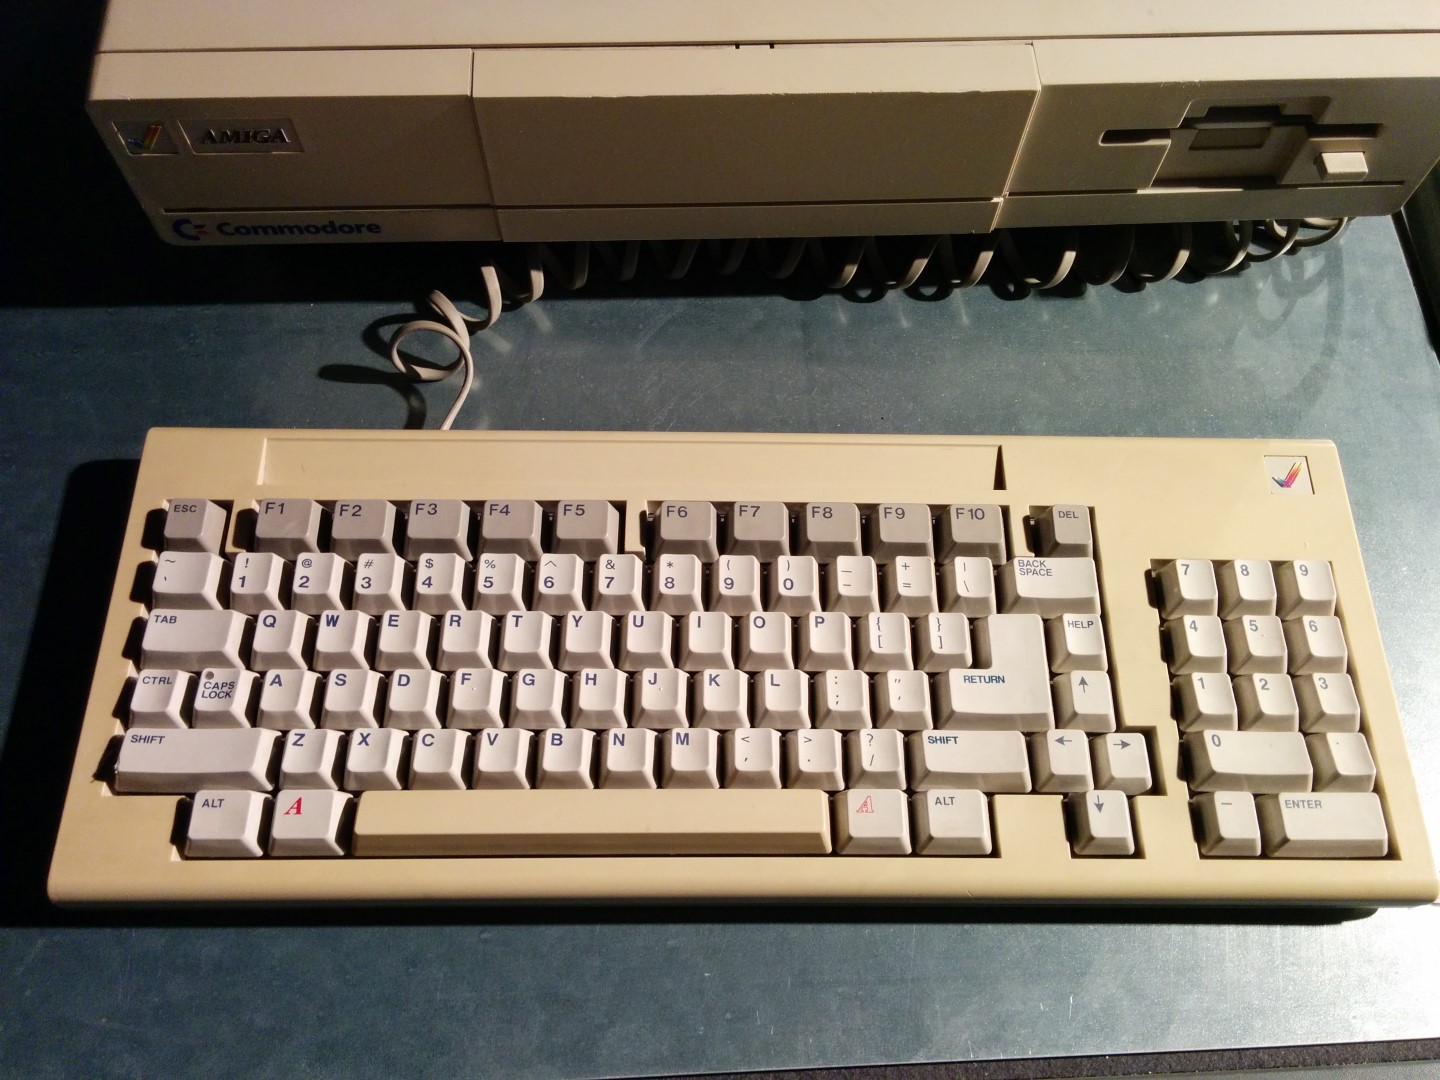 Amiga 1000, non-Cherry variant.